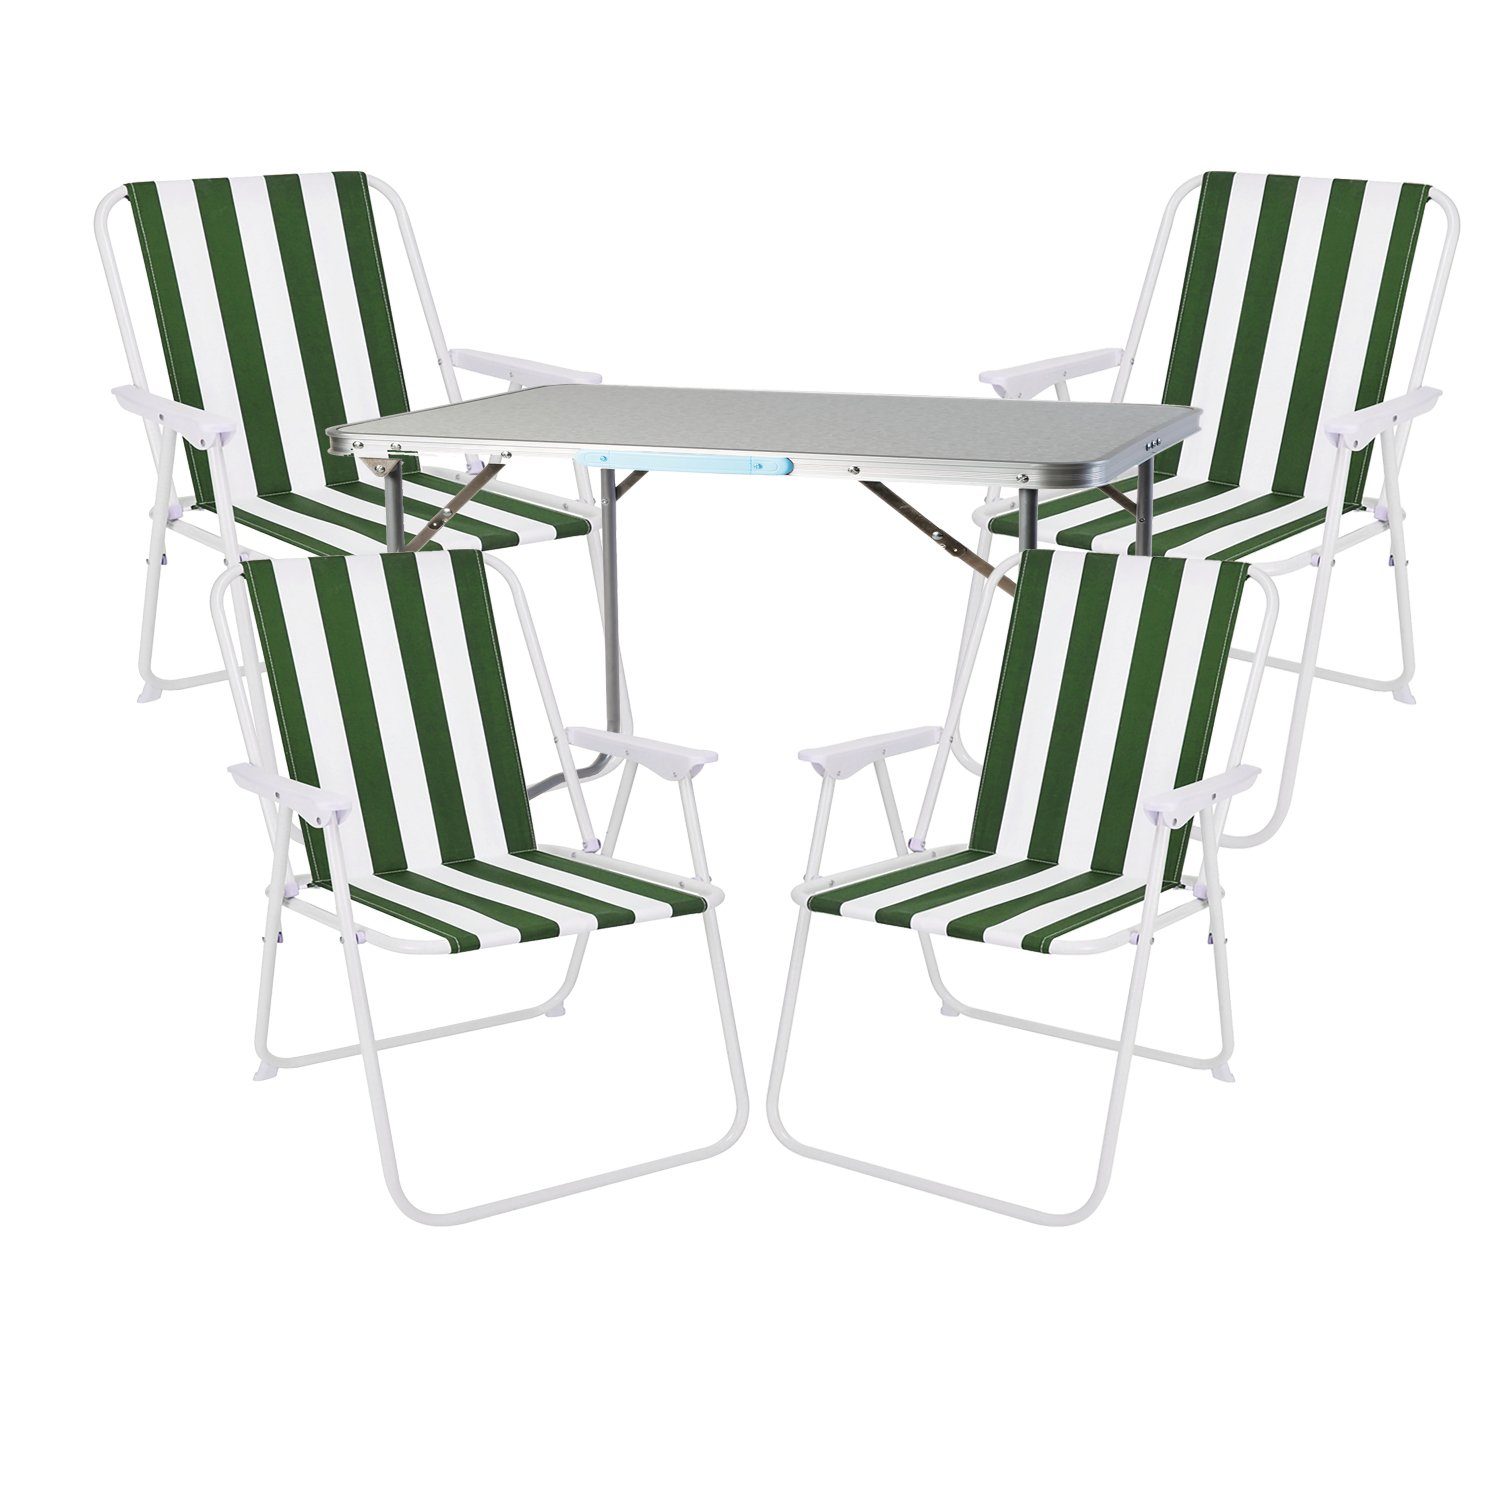 Mojawo Essgruppe 5-teiliges Campingmöbel Set Alu L70xB50xH59cm grün-weiß